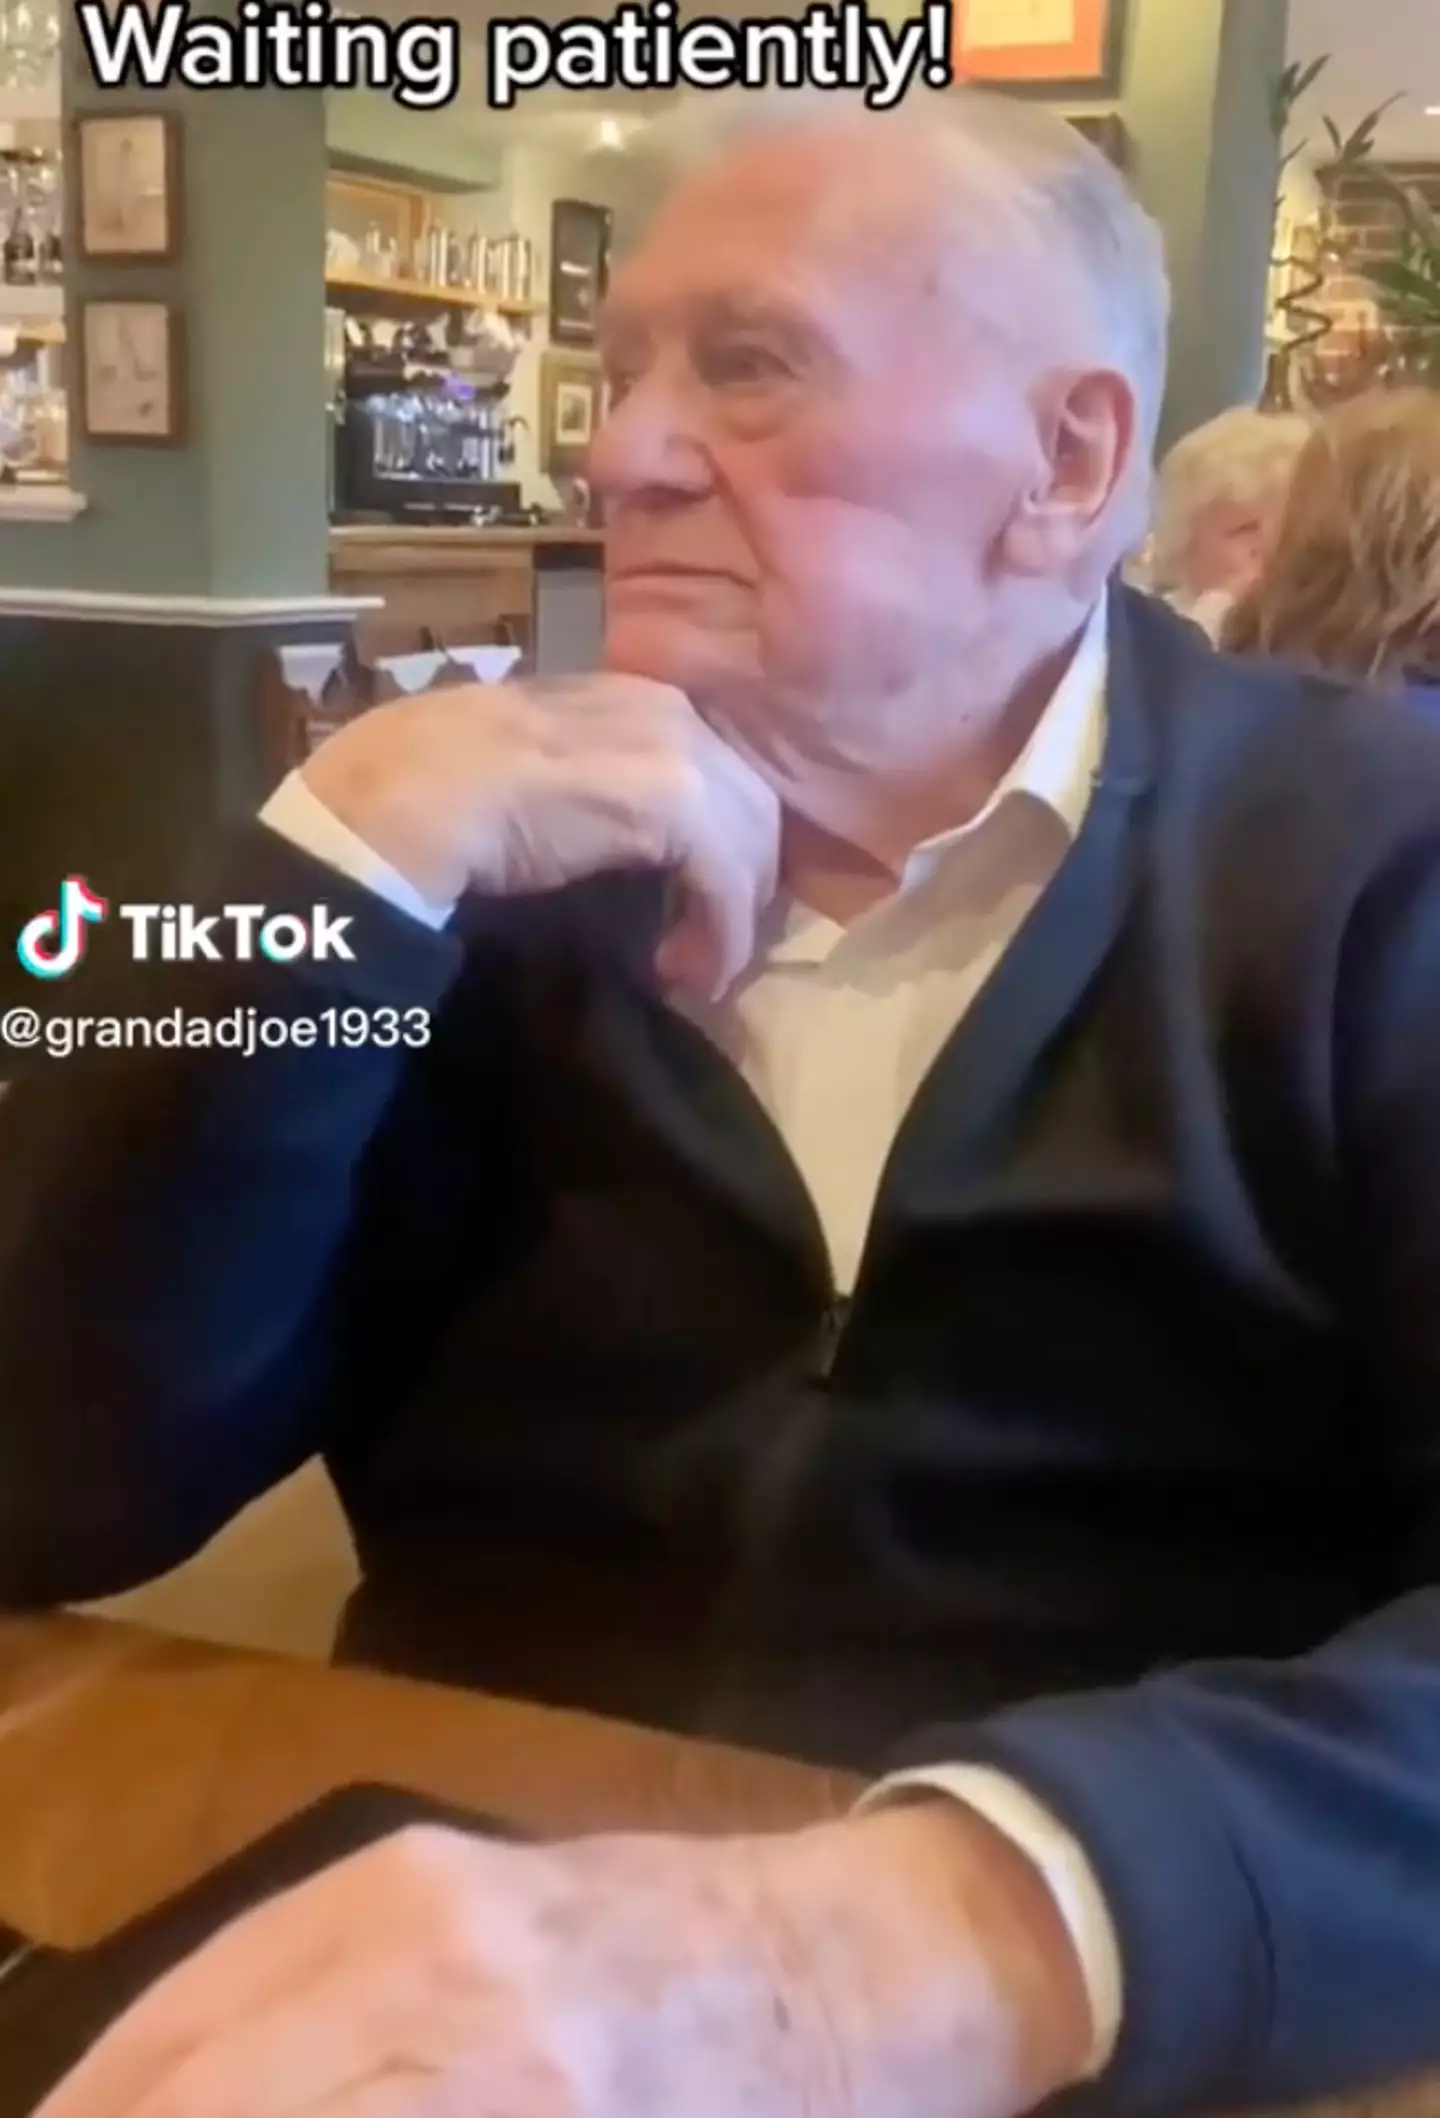 Grandad Joe took TikTok viewers along for his first date in 30 years.